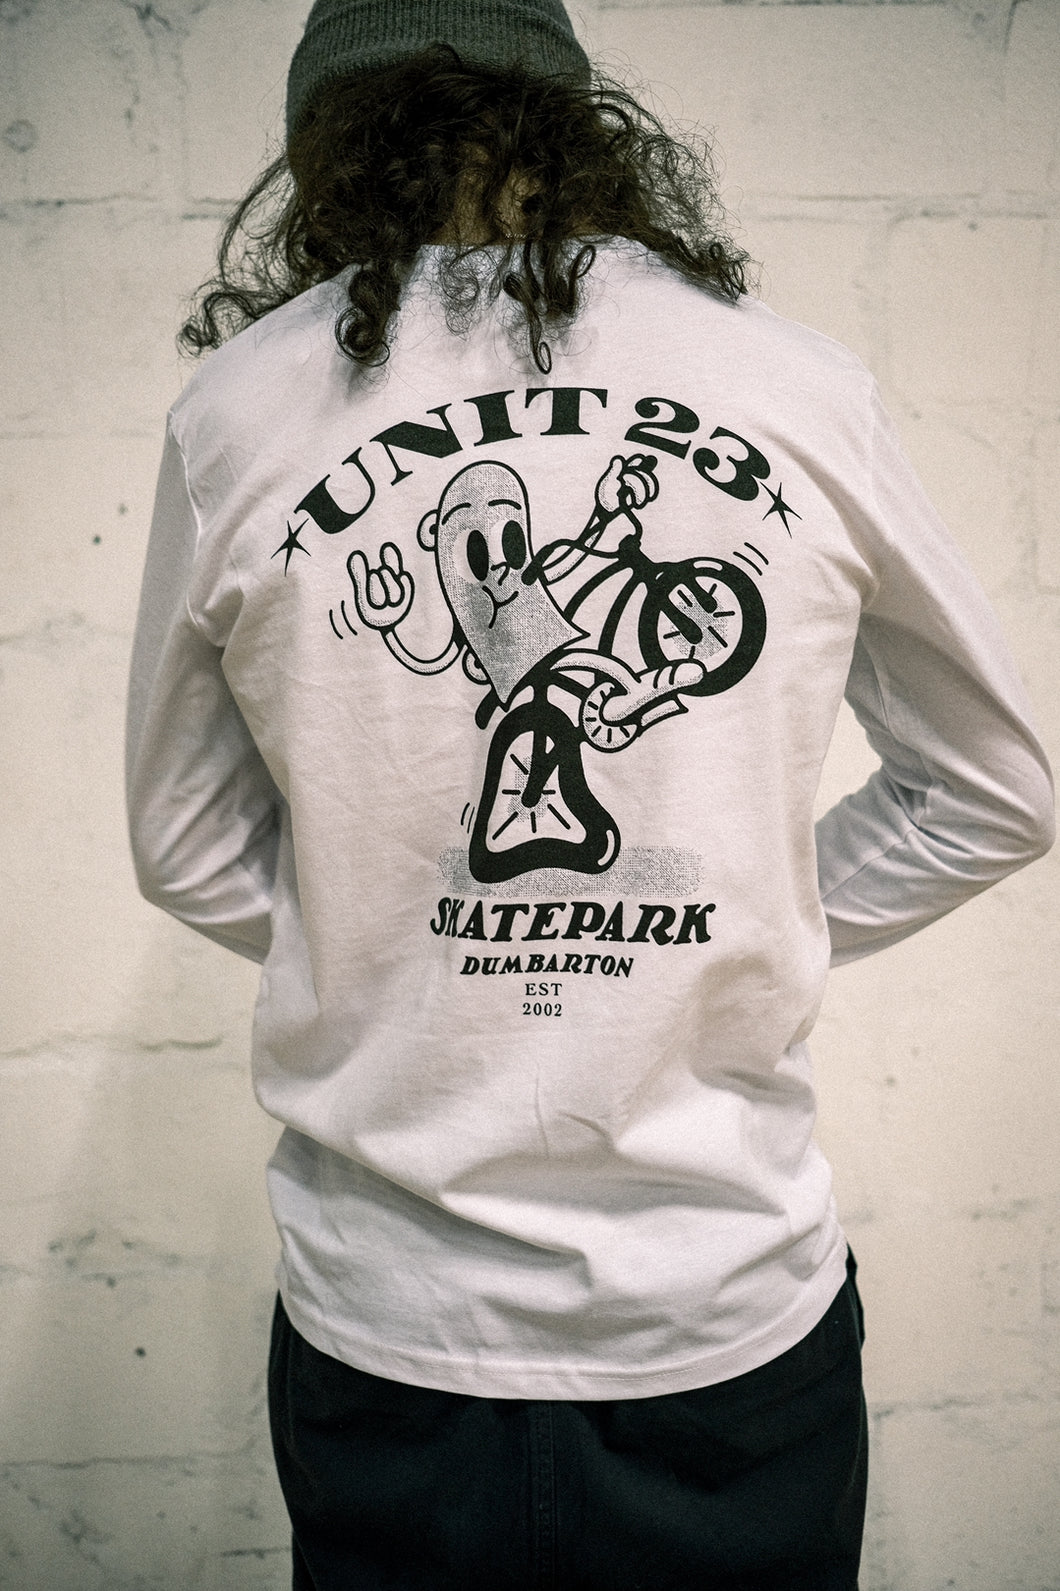 Unit 23 Kids “Dumbarton” Long Sleeve T-Shirt